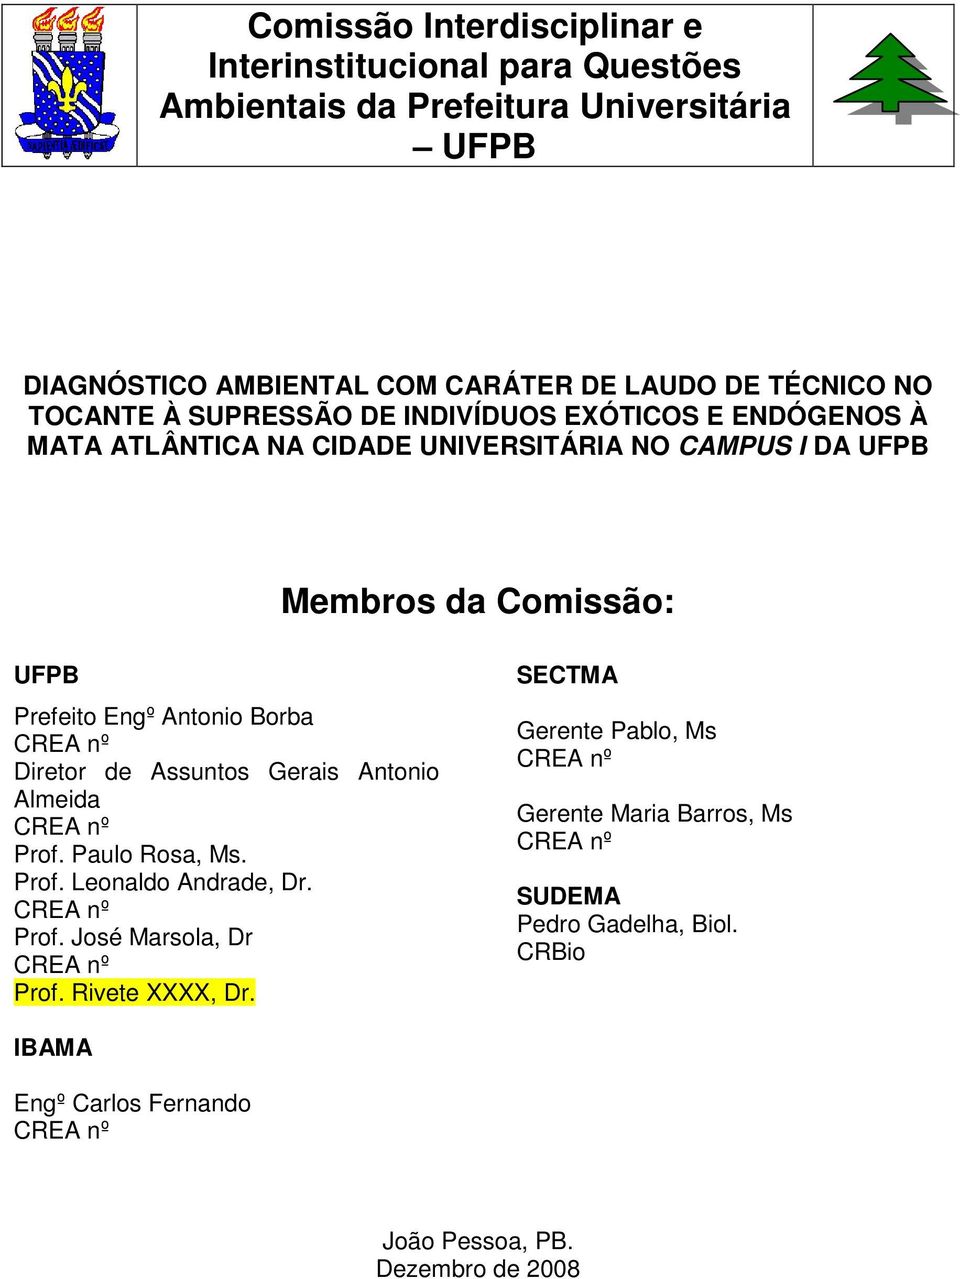 Prefeito Engº Antonio Borba Diretor de Assuntos Gerais Antonio Almeida Prof. Paulo Rosa, Ms. Prof. Leonaldo Andrade, Dr. Prof. José Marsola, Dr Prof.